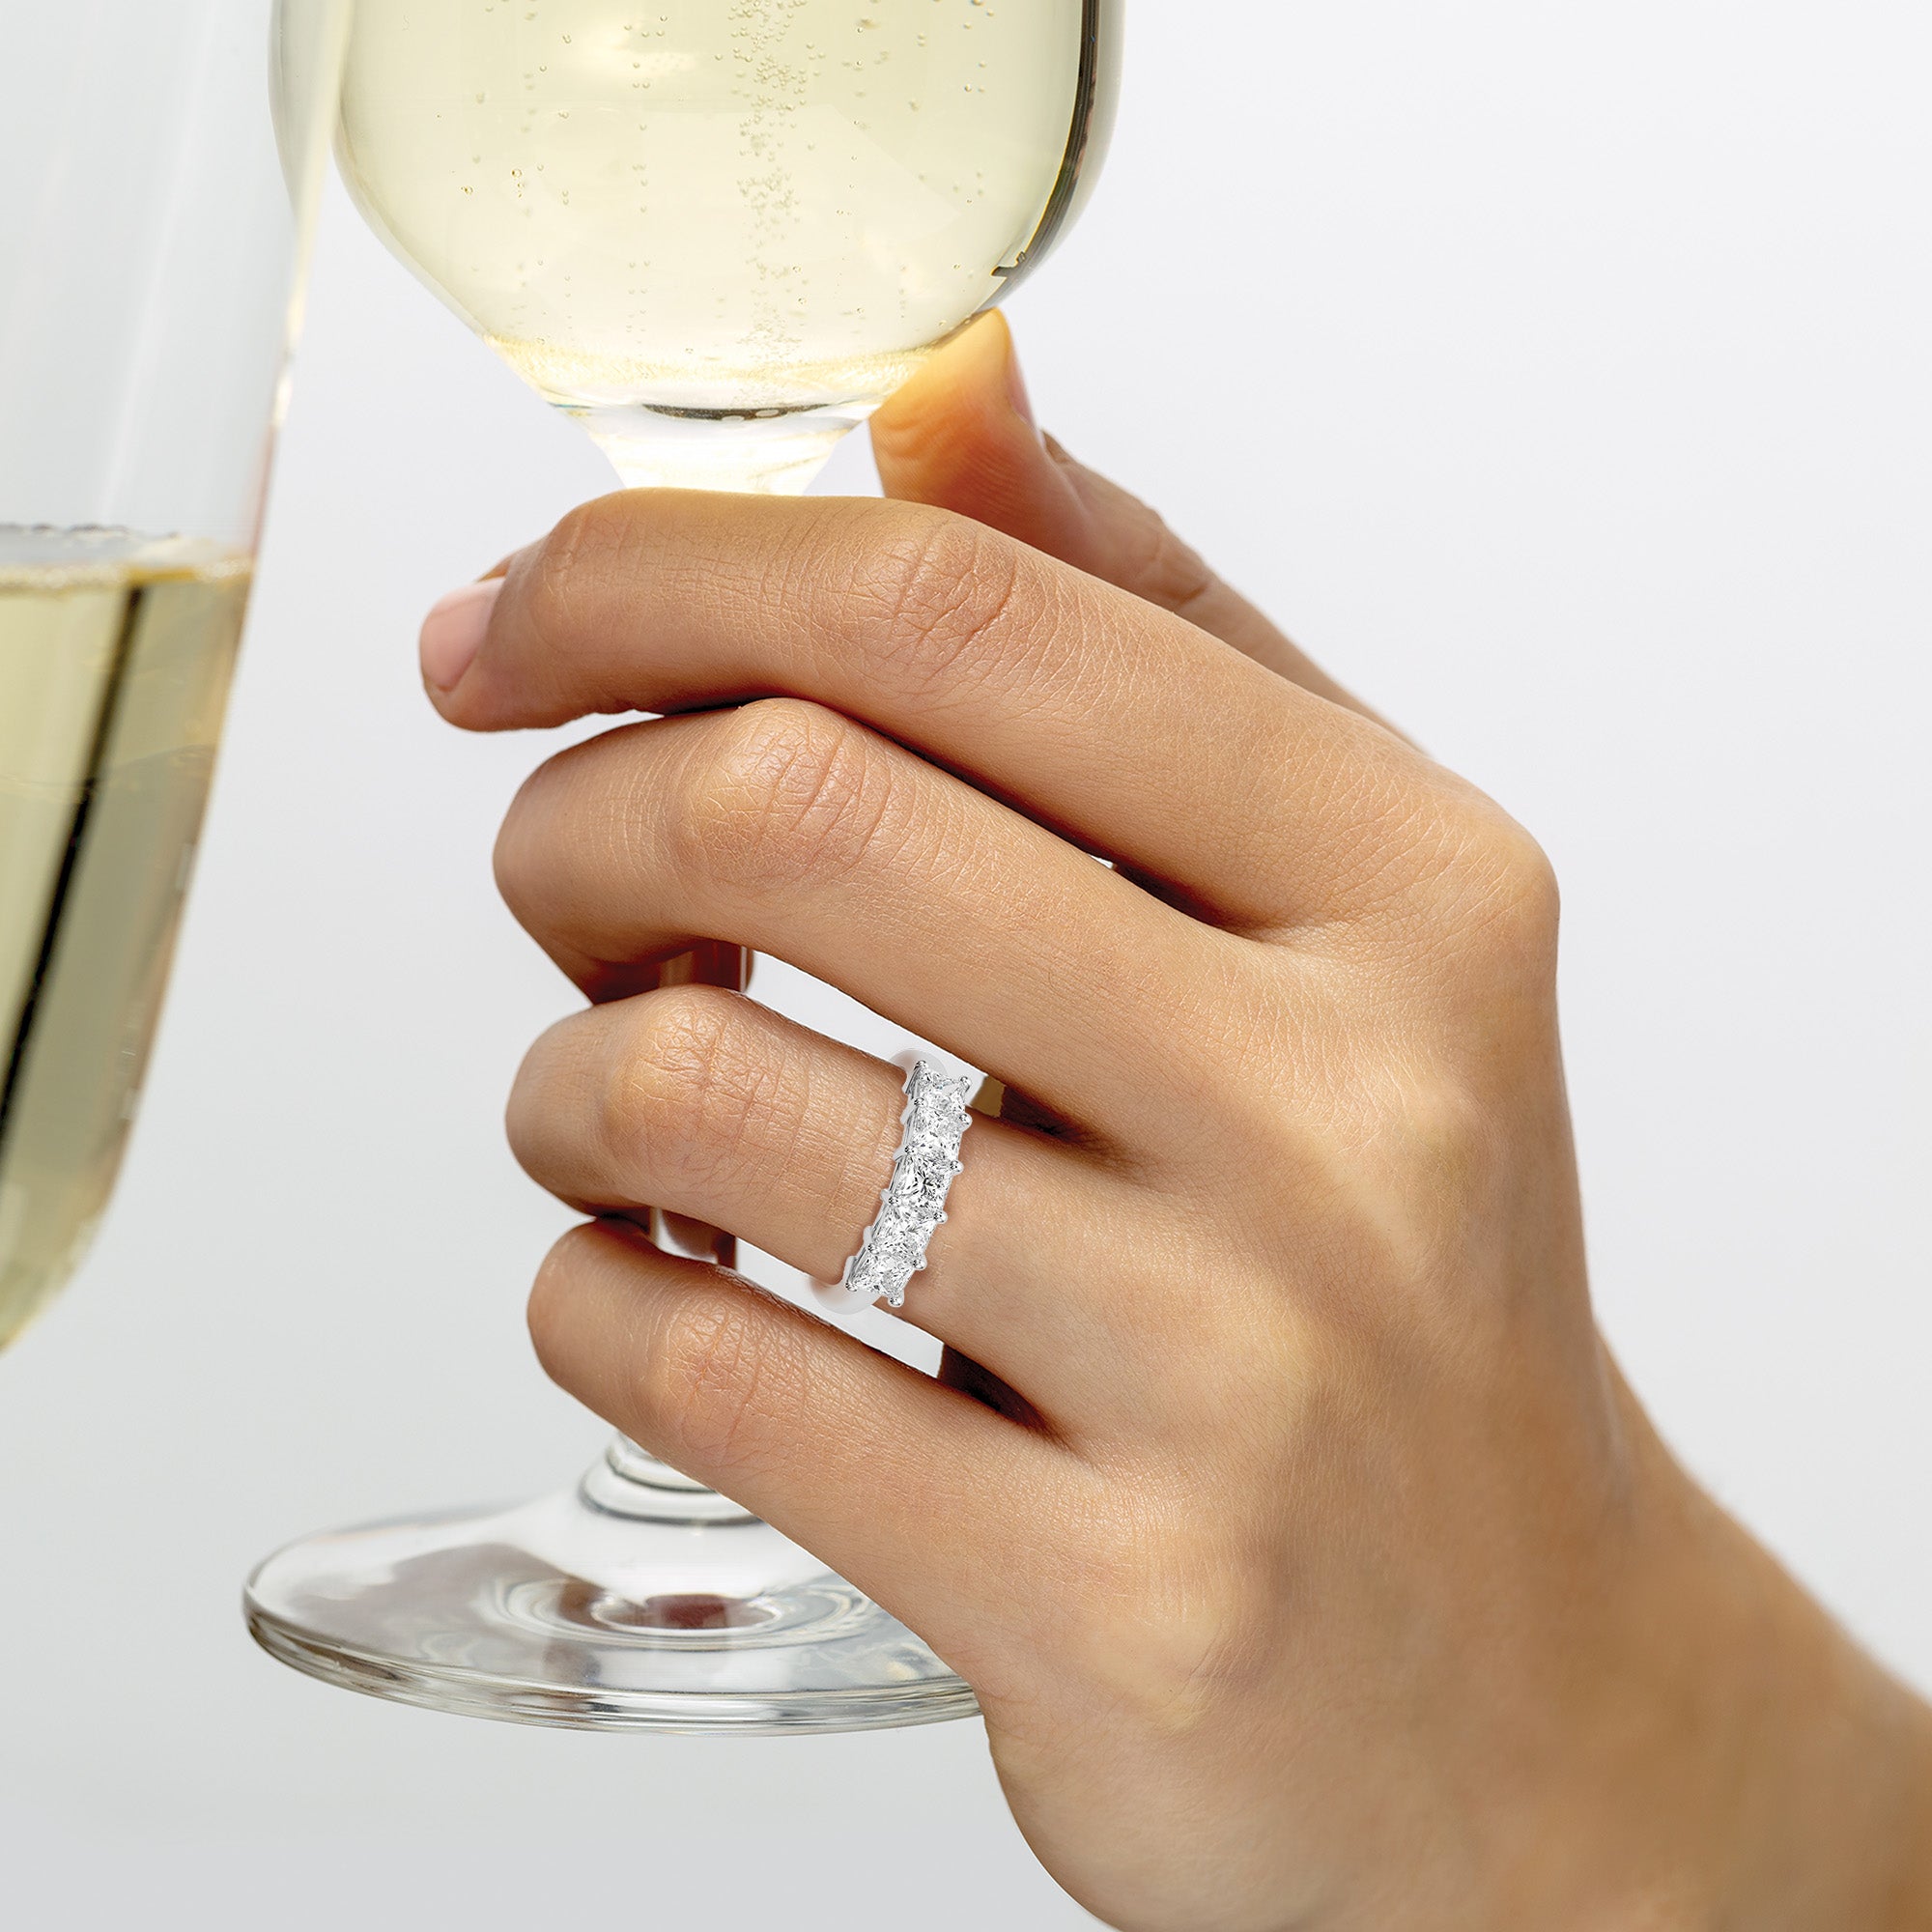 Five Stone 2.0 ct. Princess Cut Diamond Wedding Ring